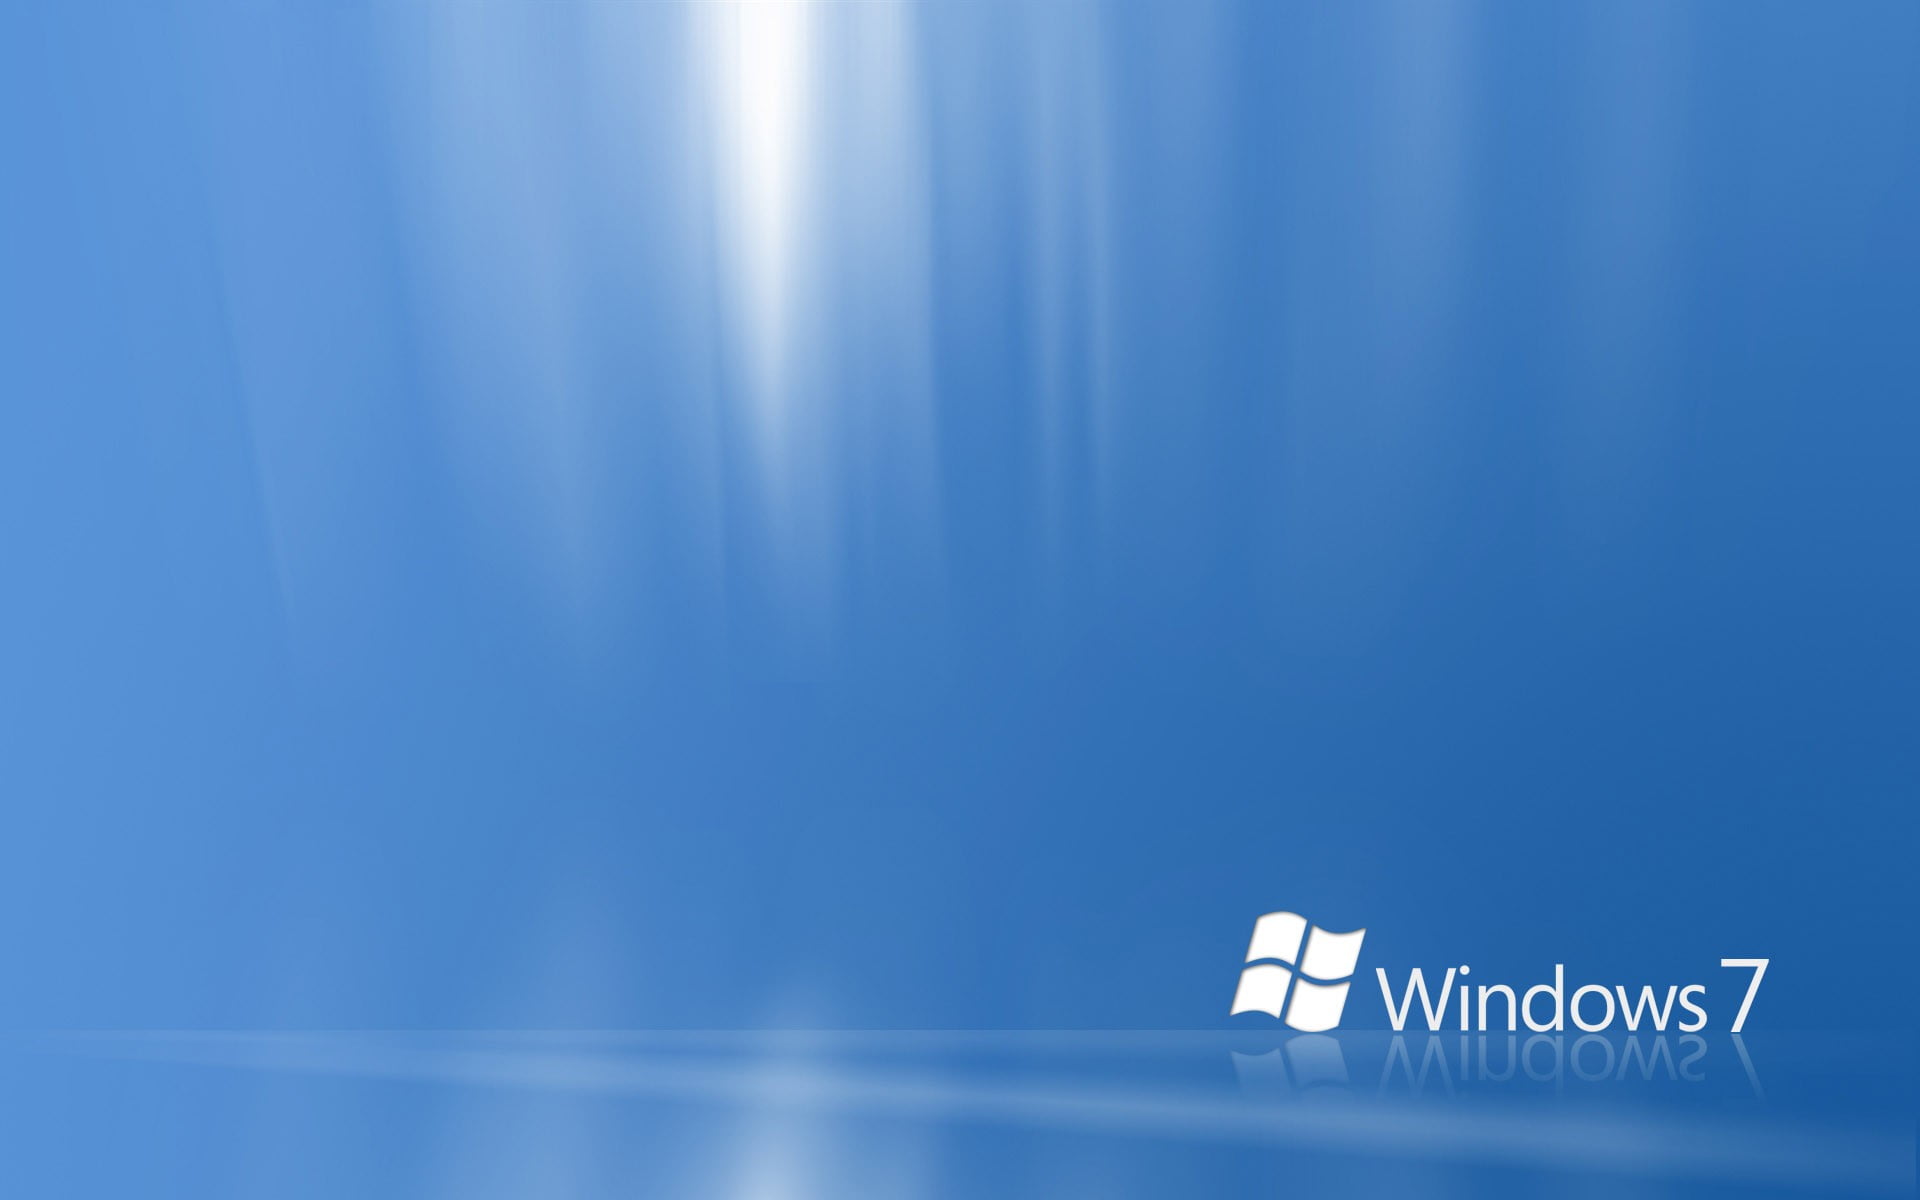 Windows 7 logo, Windows 7, Microsoft Windows, minimalism, blue ...